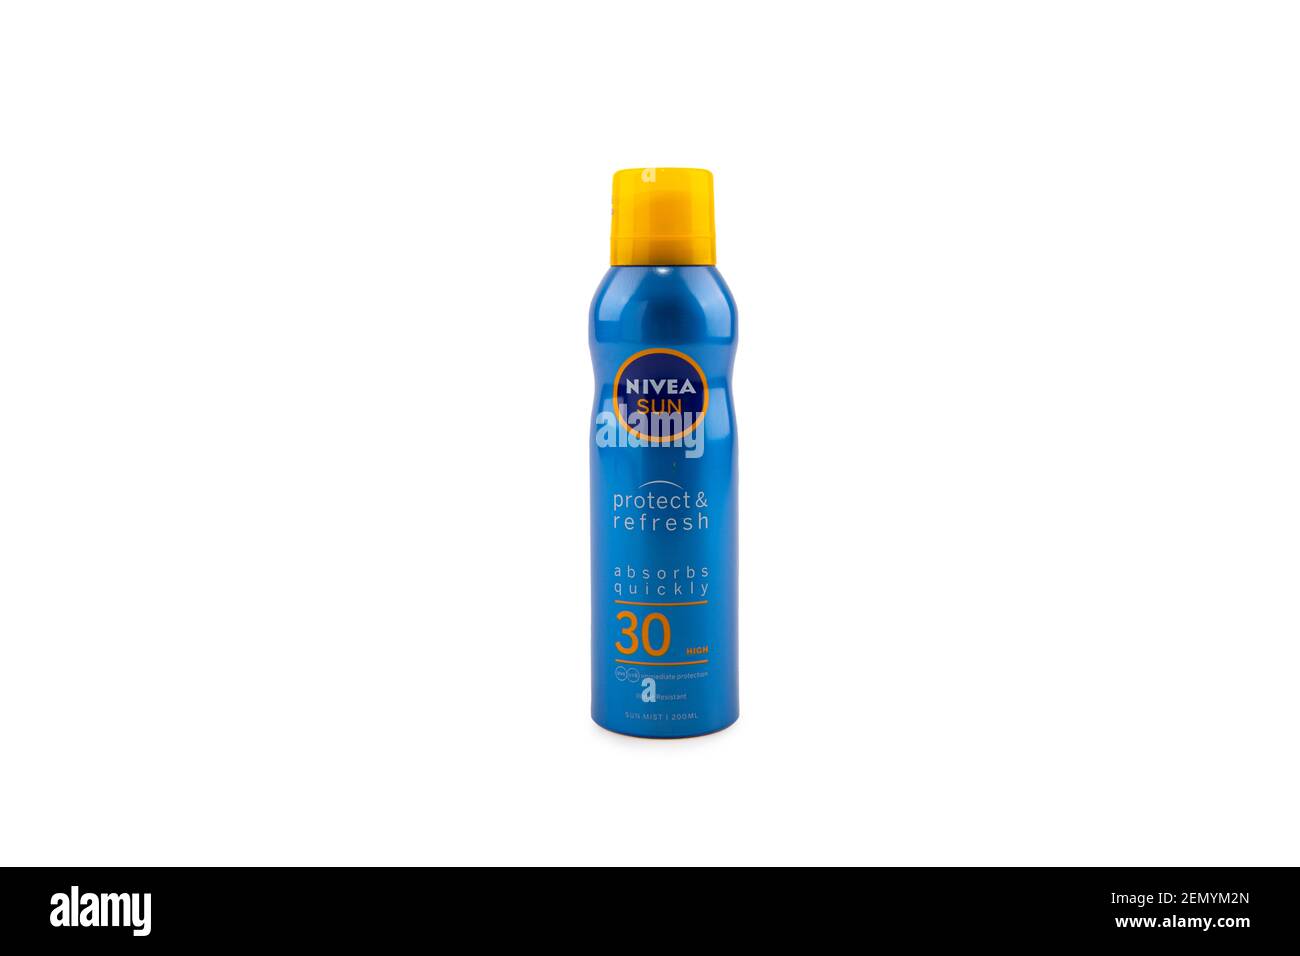 Nivea Sun Protect Refresh Spry bottle on white Stock Photo - Alamy